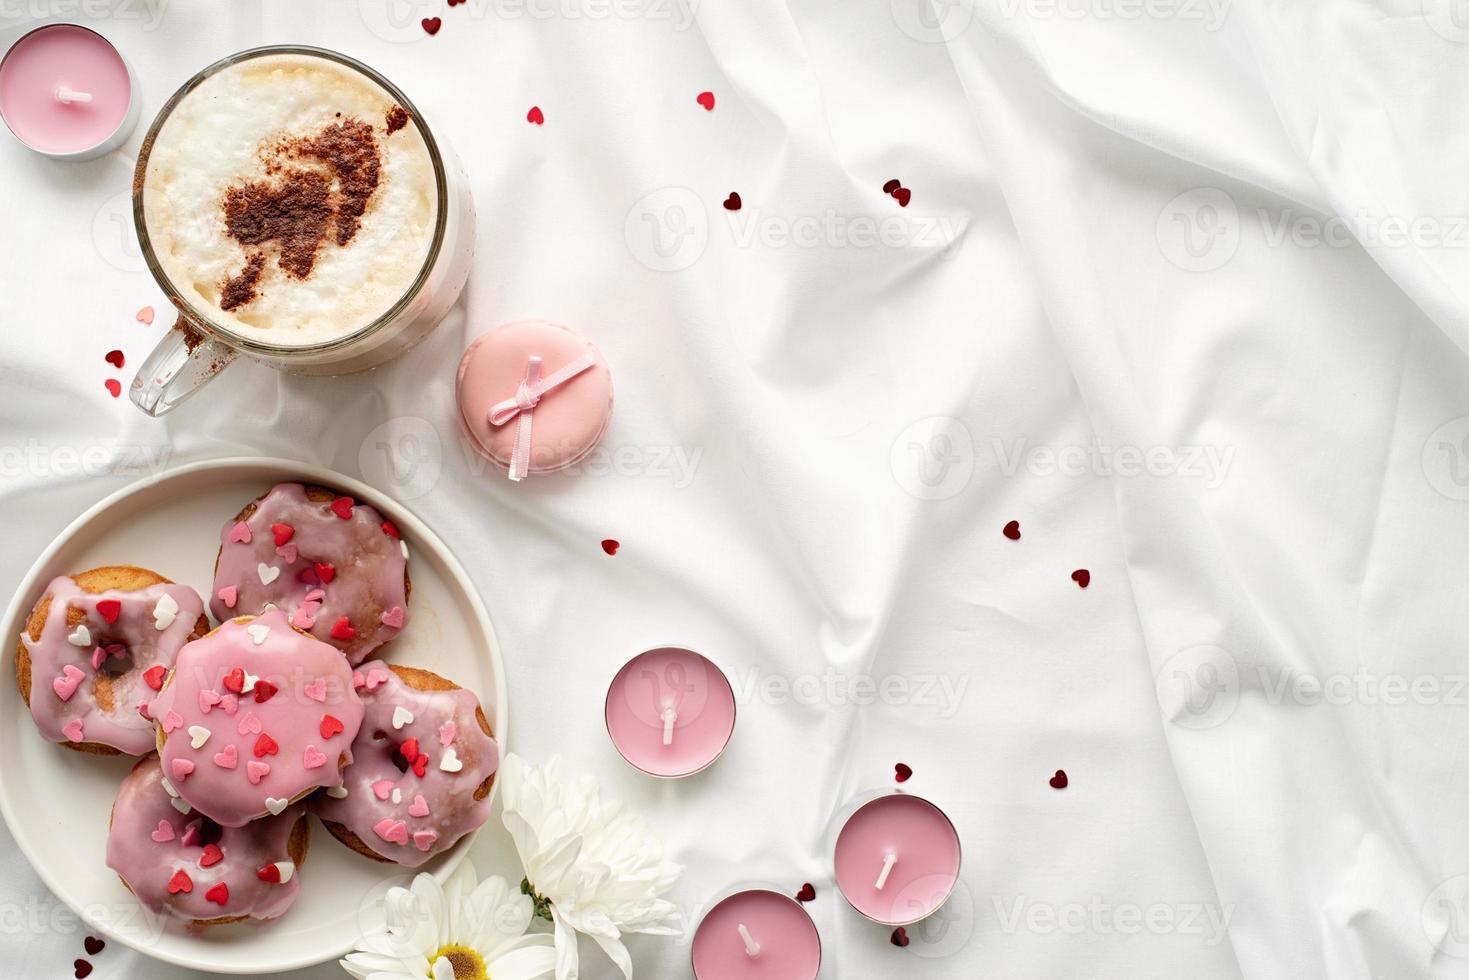 kleine donuts op wit bed met kopje koffie foto